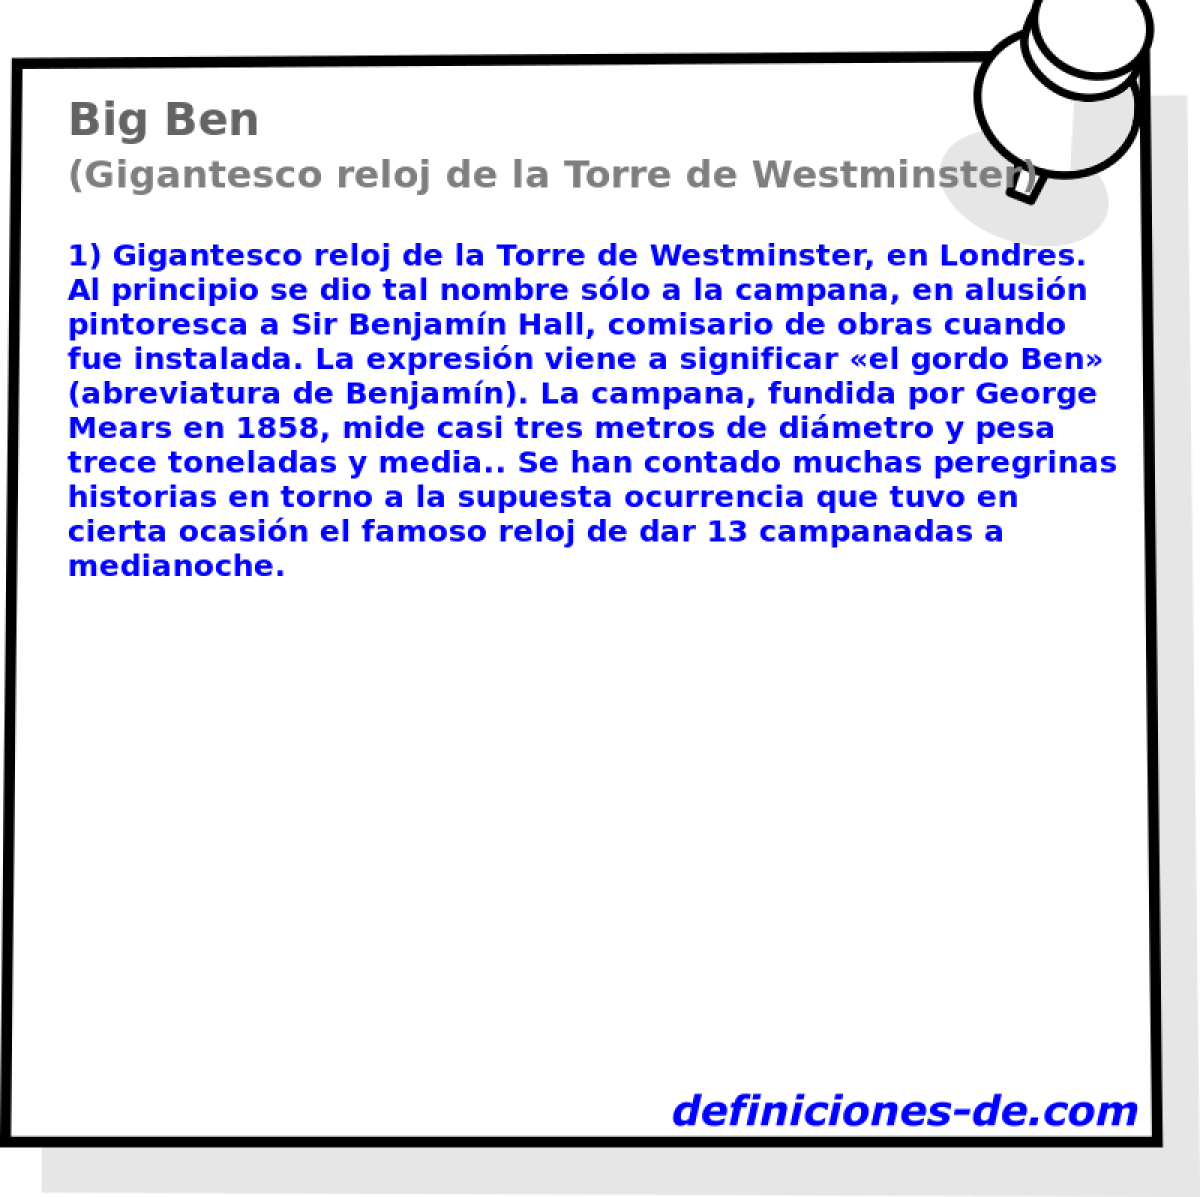 Big Ben (Gigantesco reloj de la Torre de Westminster)